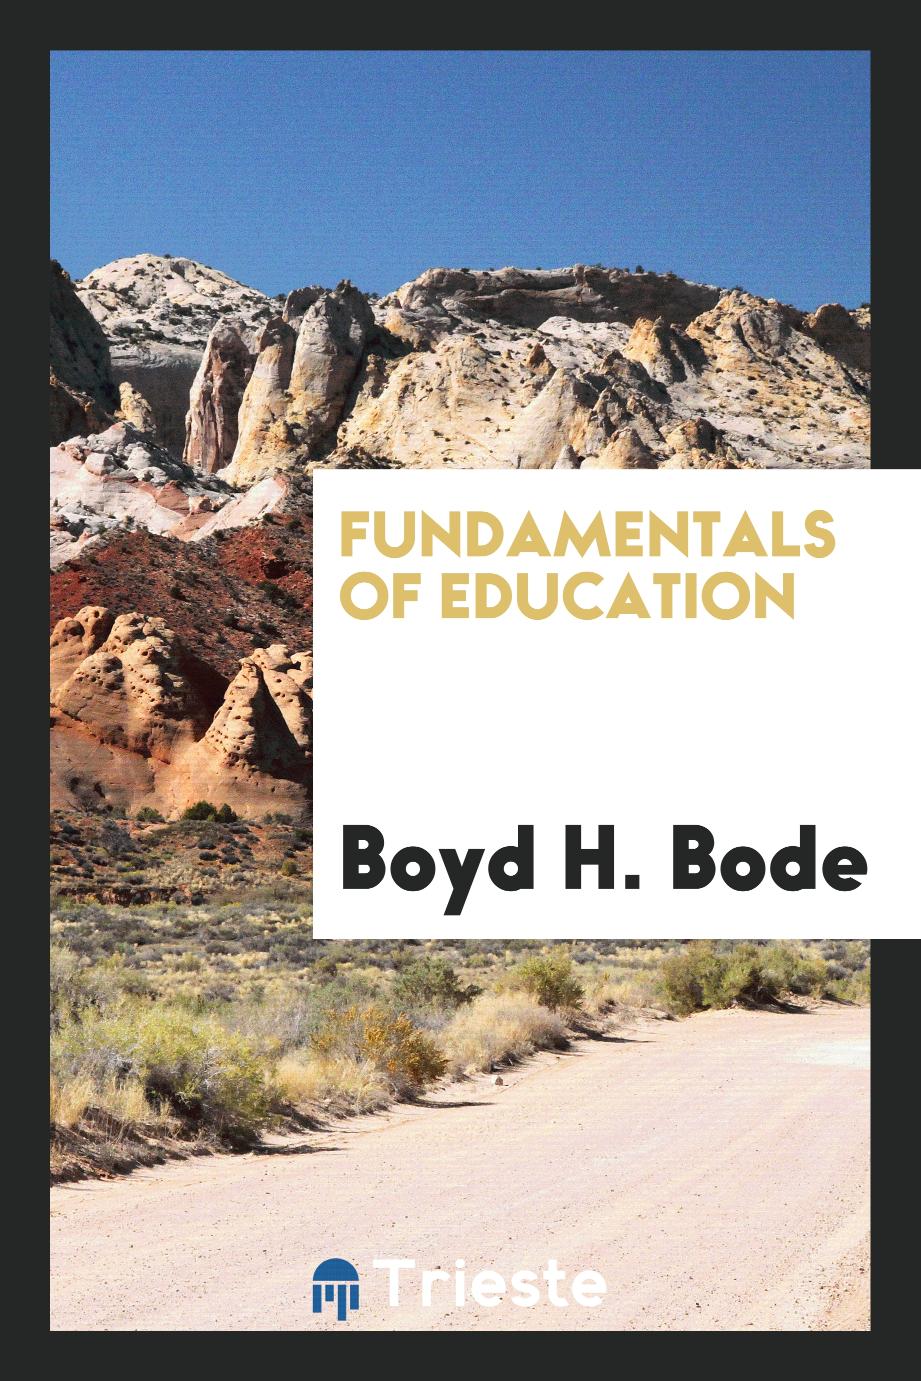 Fundamentals of education